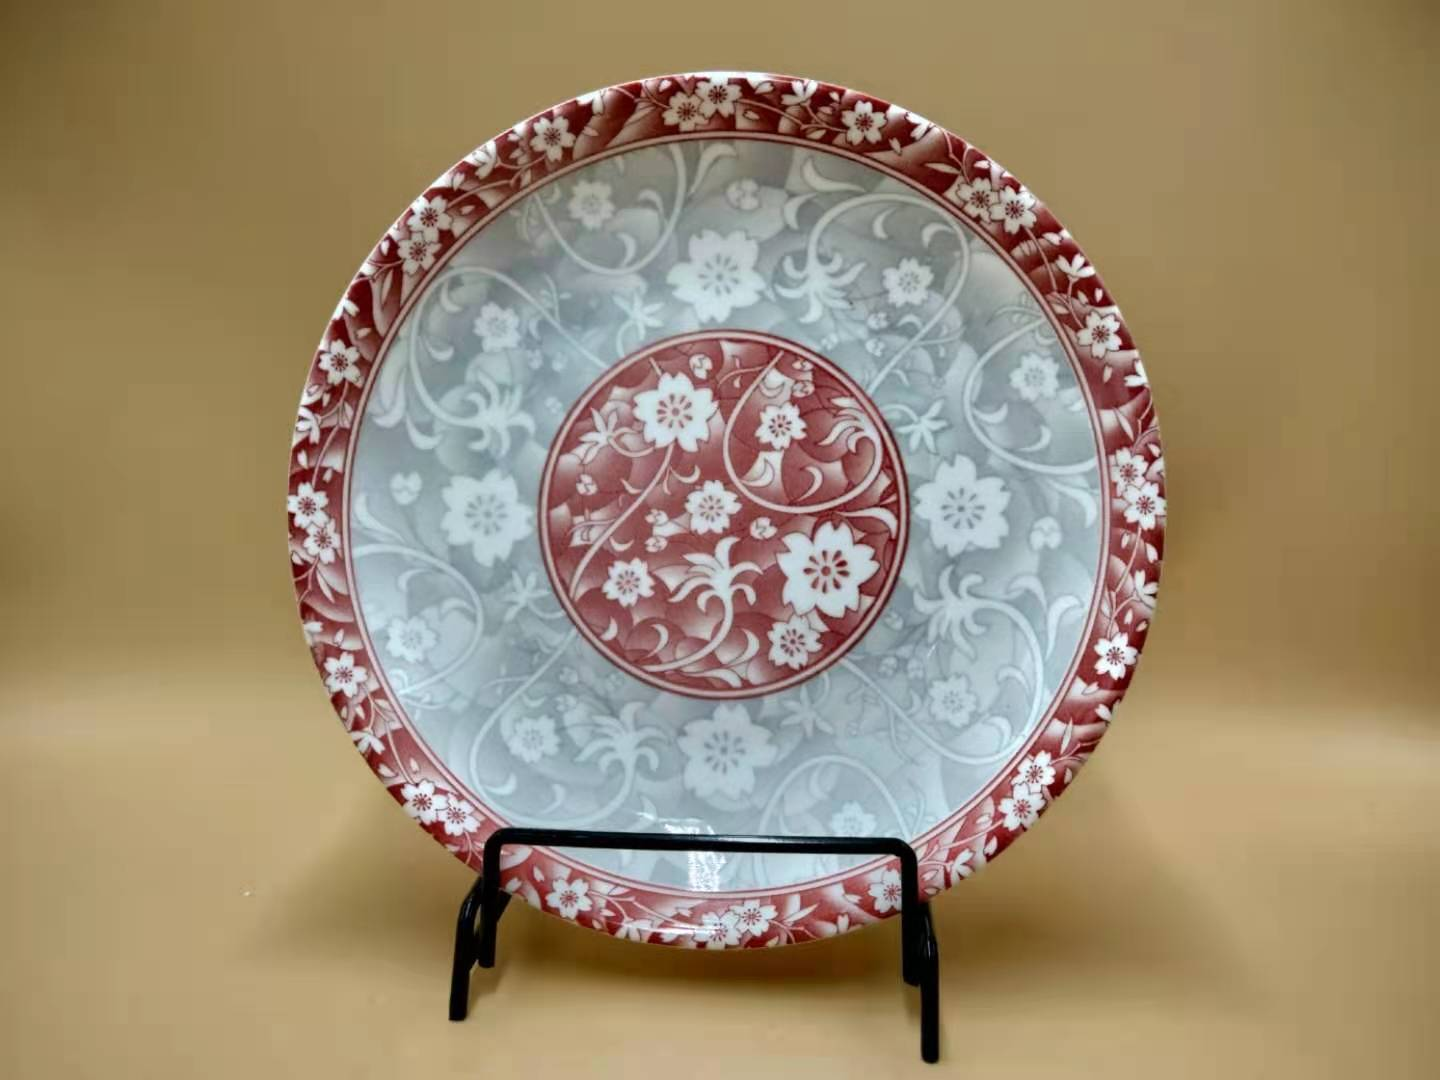 Red ceramic bowl